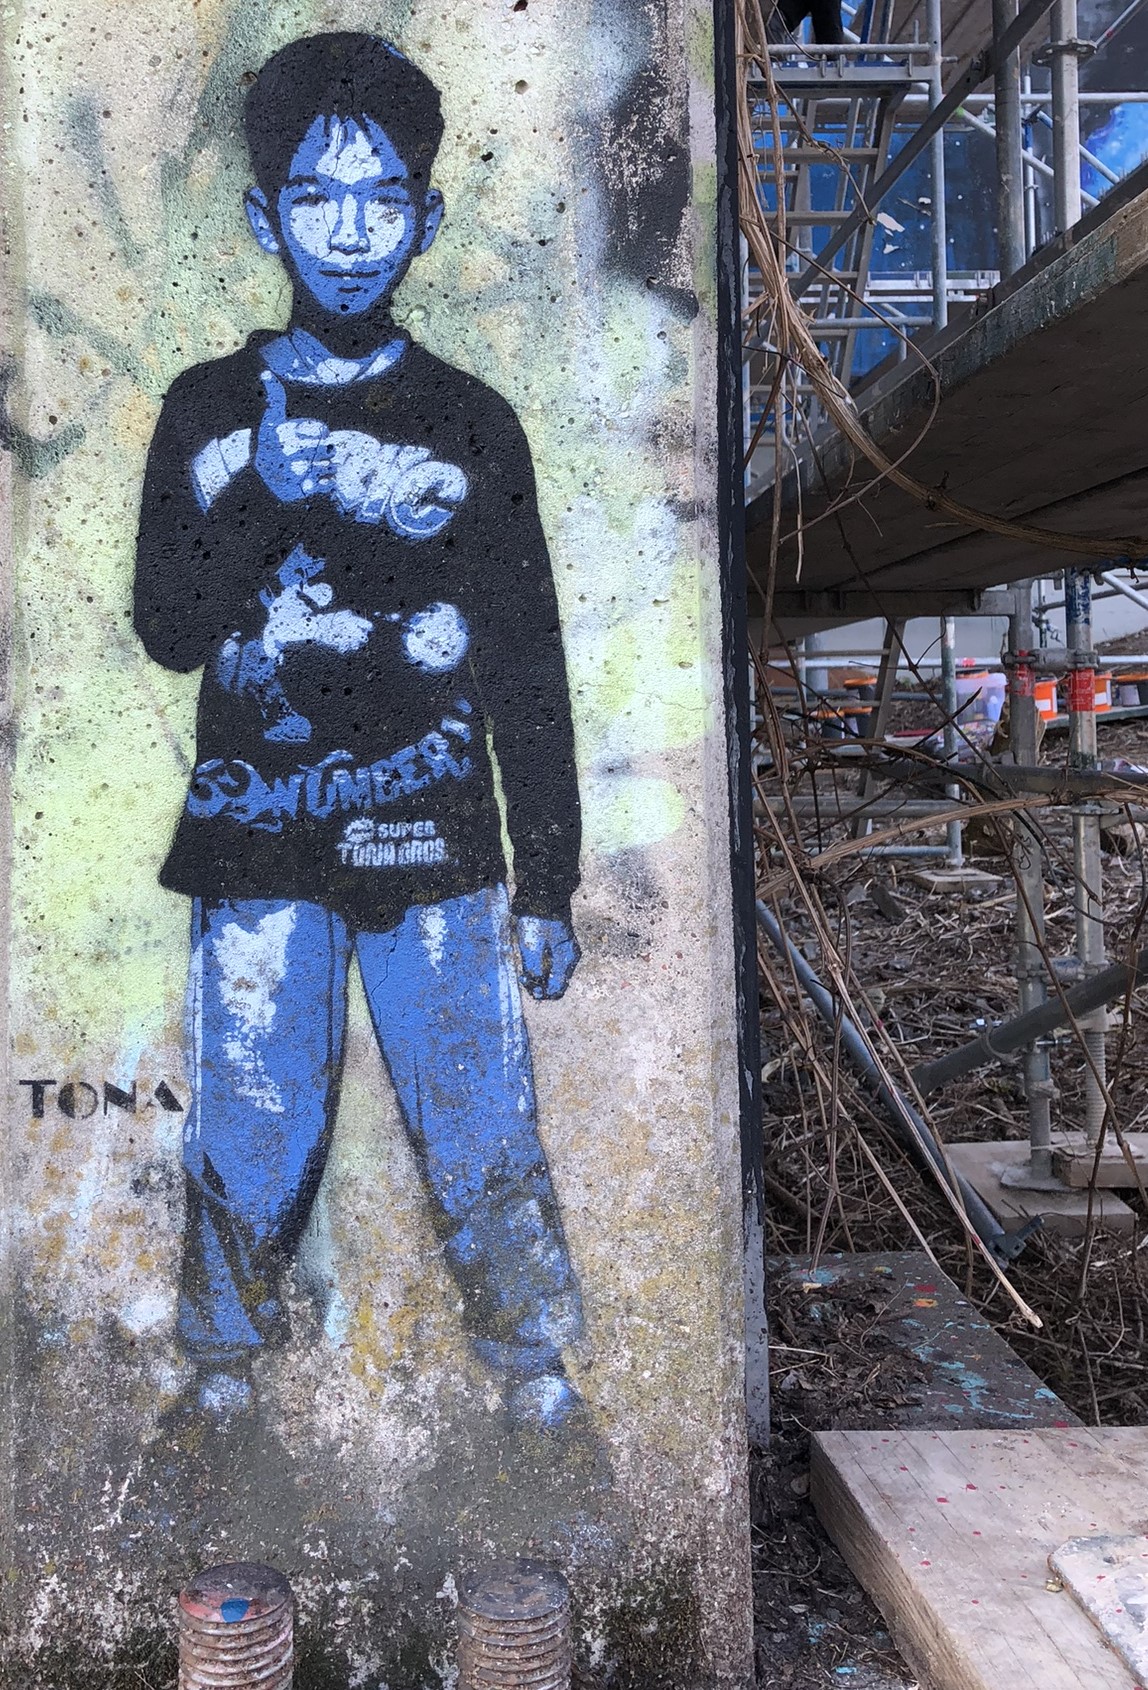 Graffiti-Junge von Tona am Kantinengebäude der Radarstation Teufelsberg in Berlin